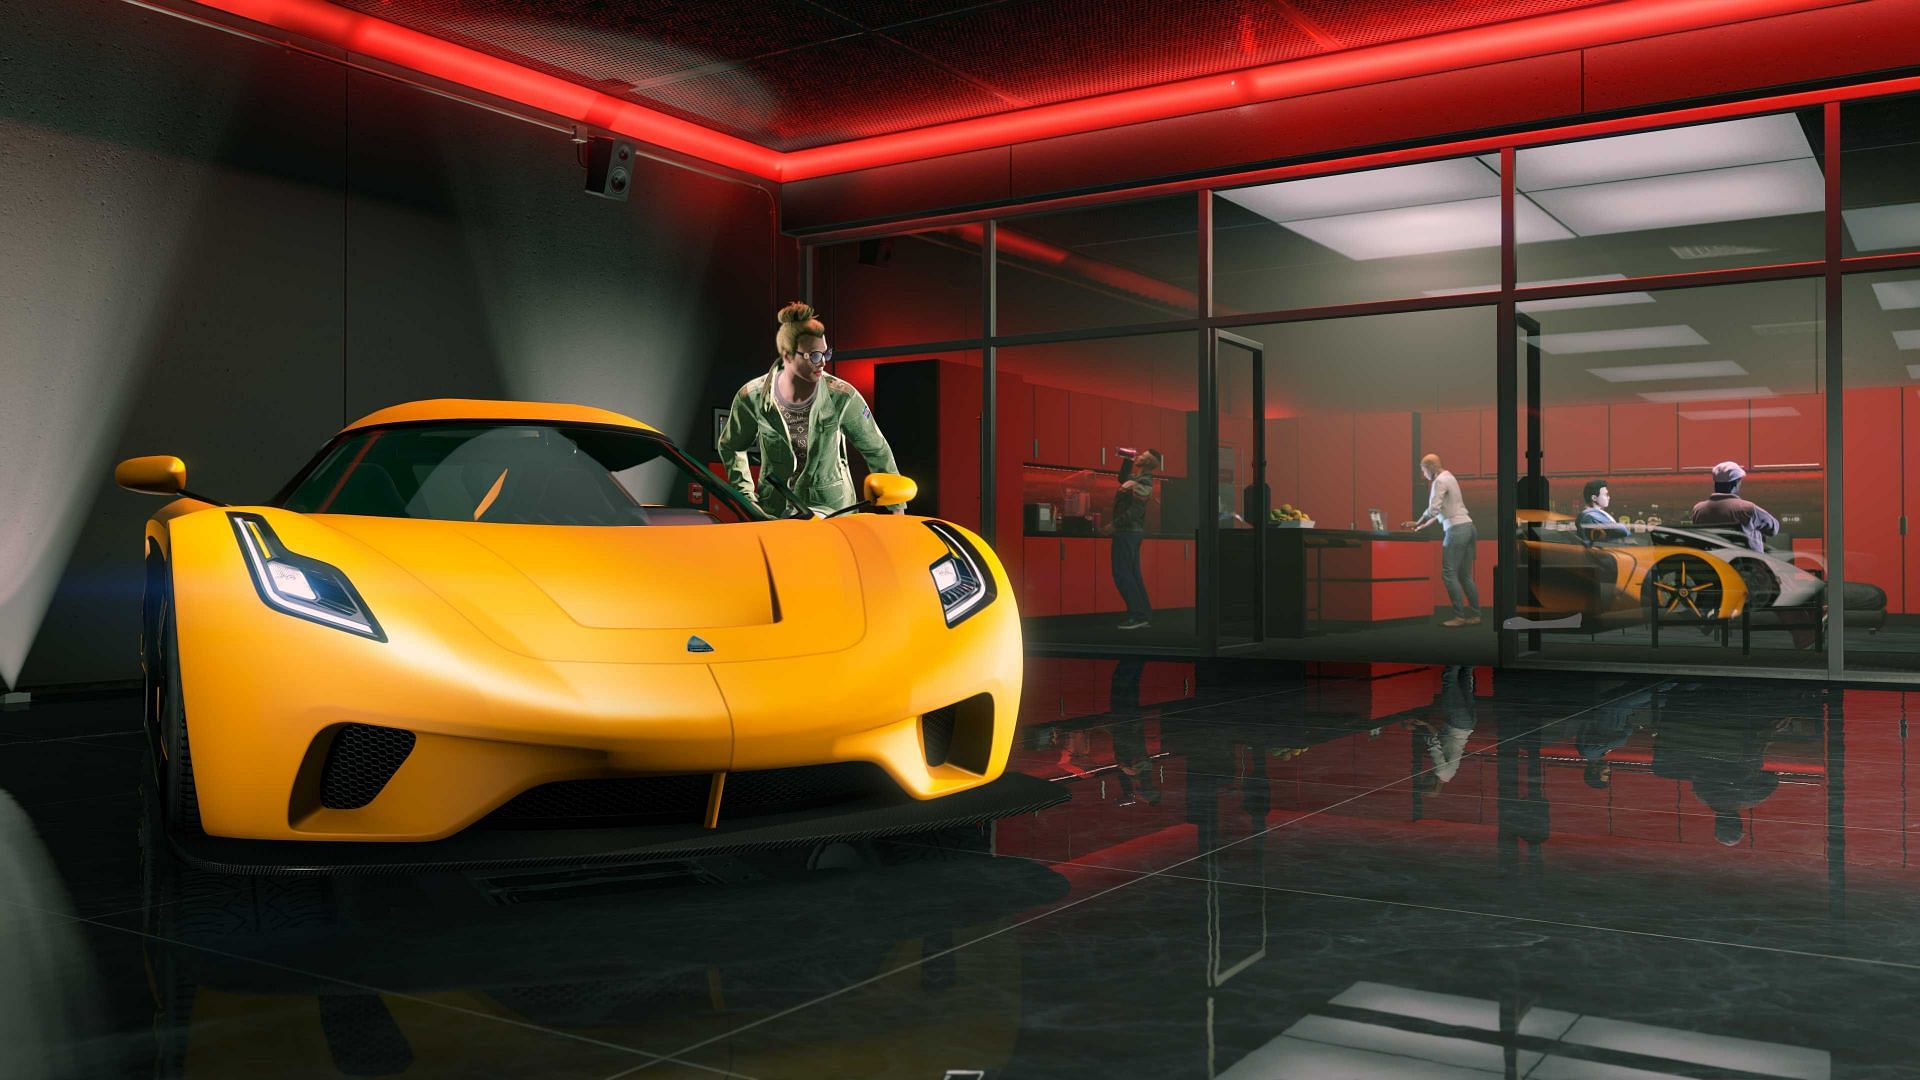 An inside look at the 50 car Garage (Image via Rockstar Games)